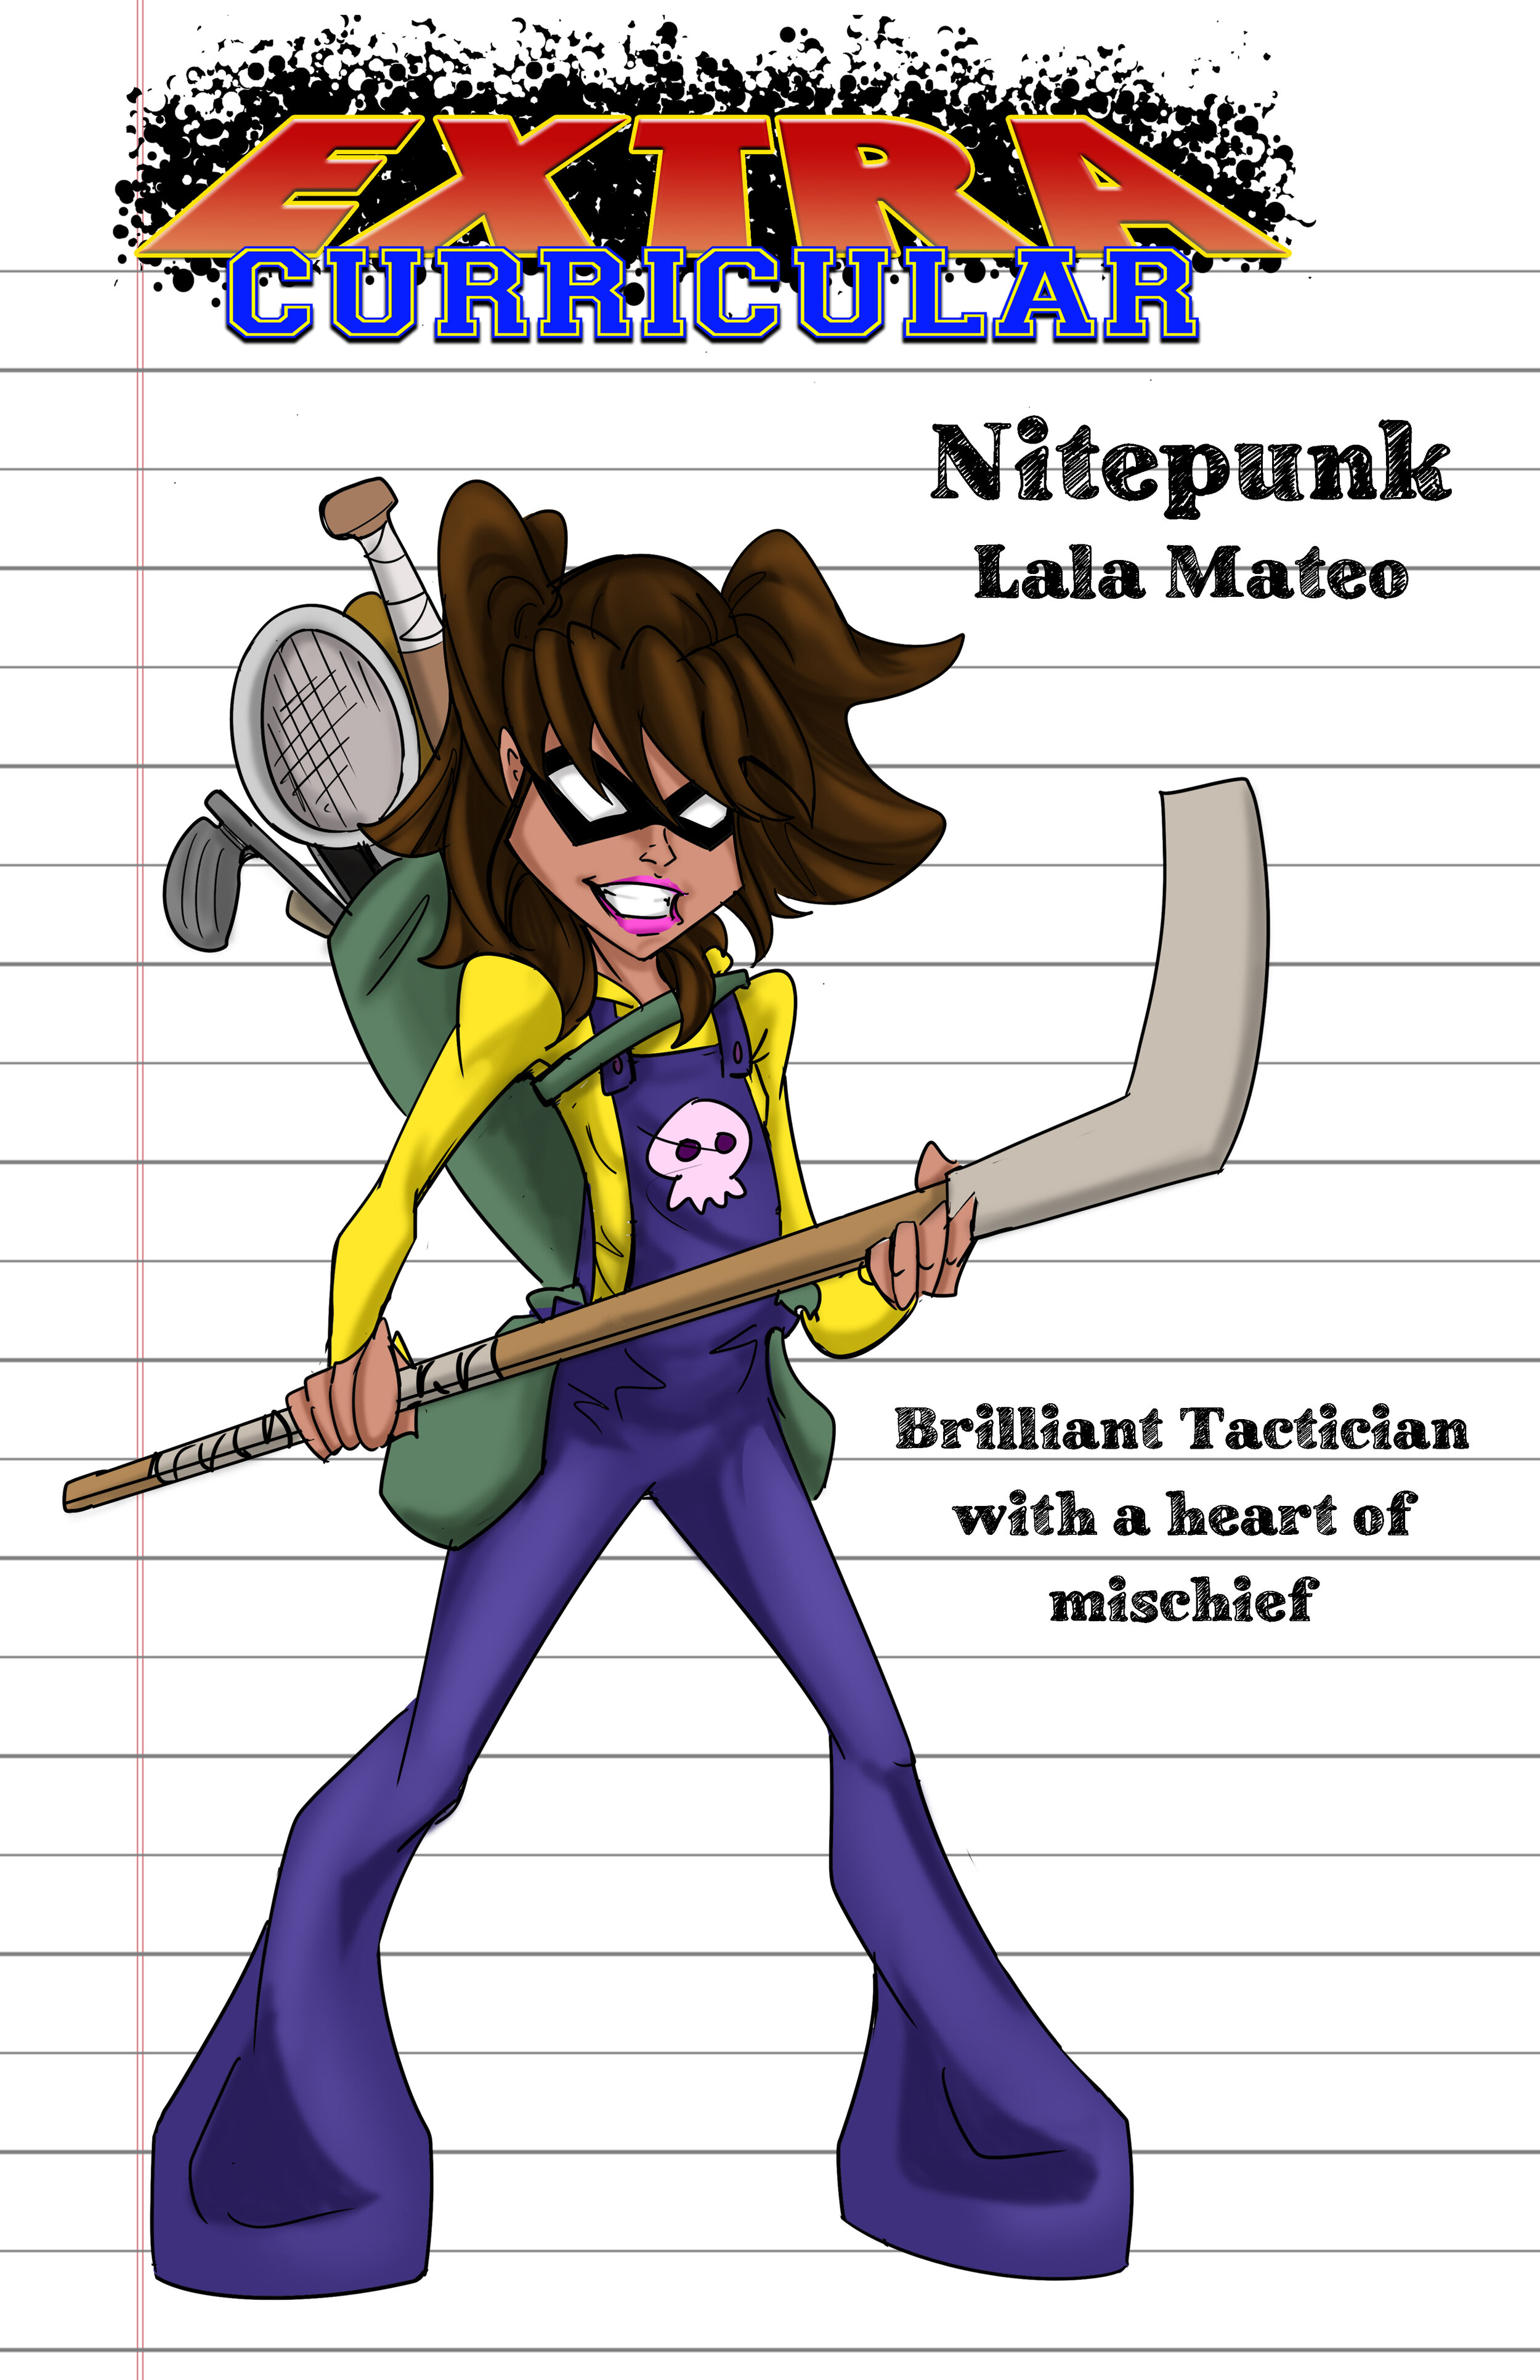 Nitepunk character sheet copy.jpg